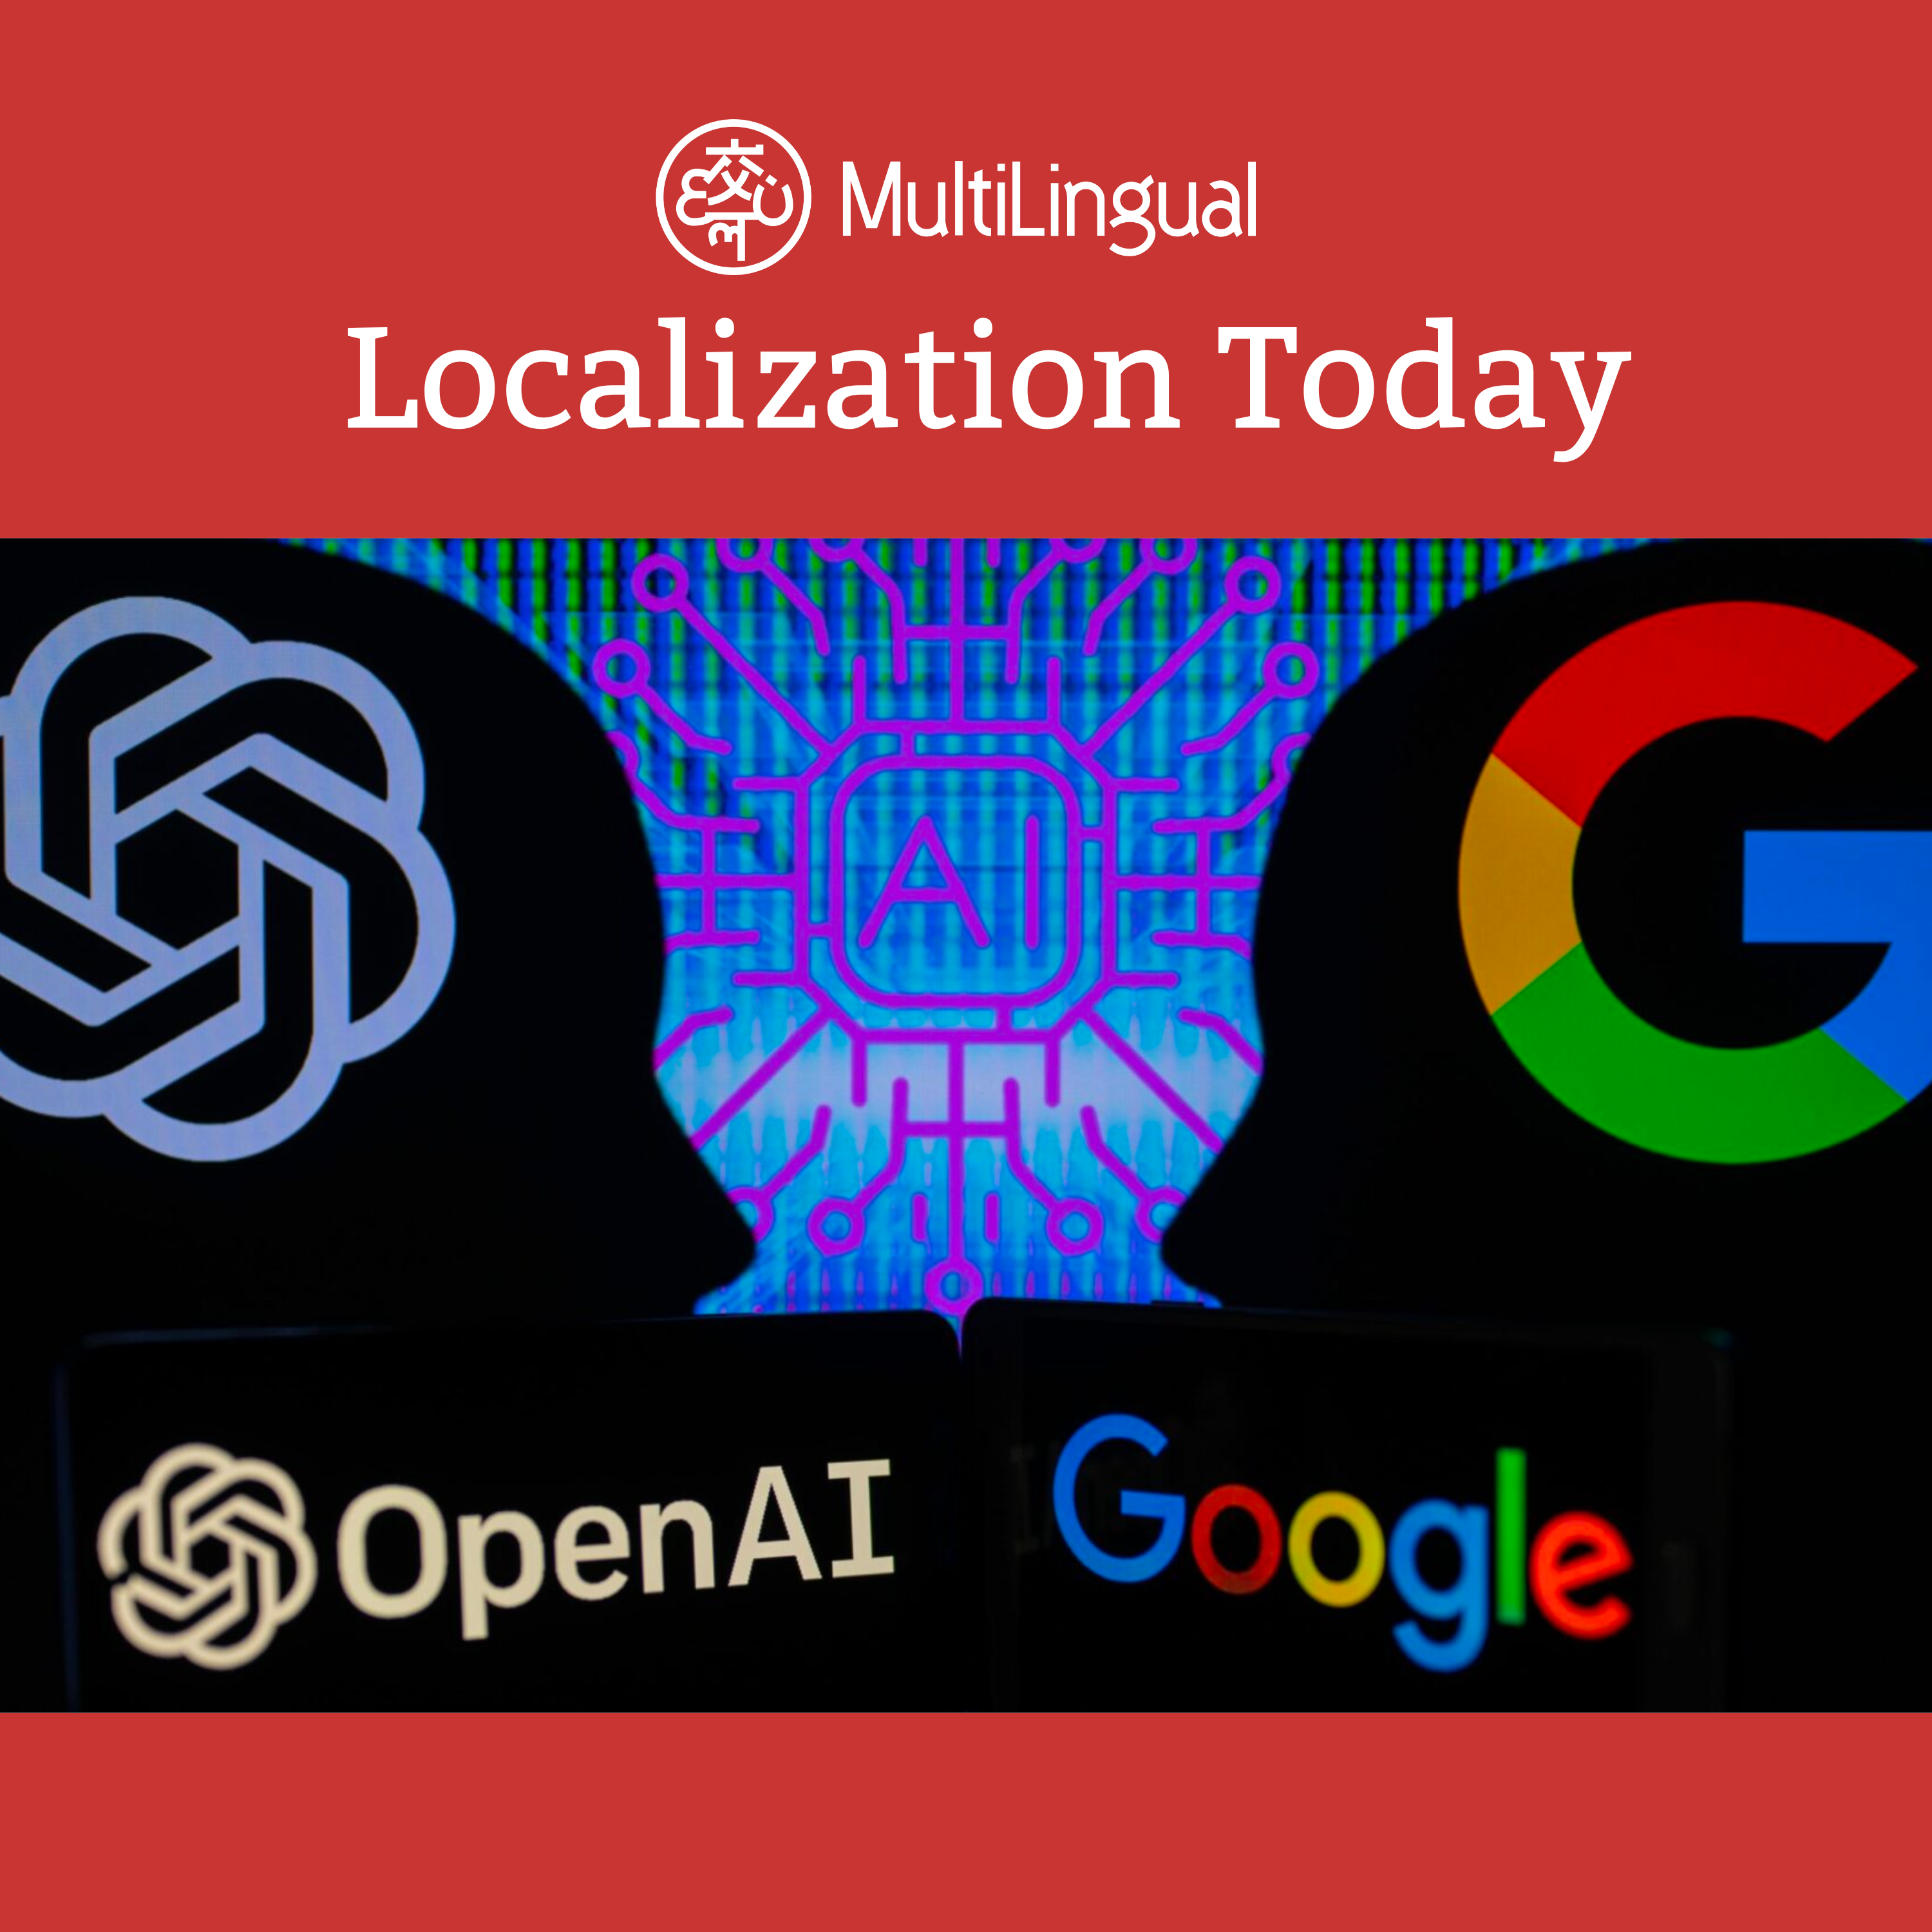 With Gemini Launch, Google Overtakes OpenAI in Multimodal AI Race